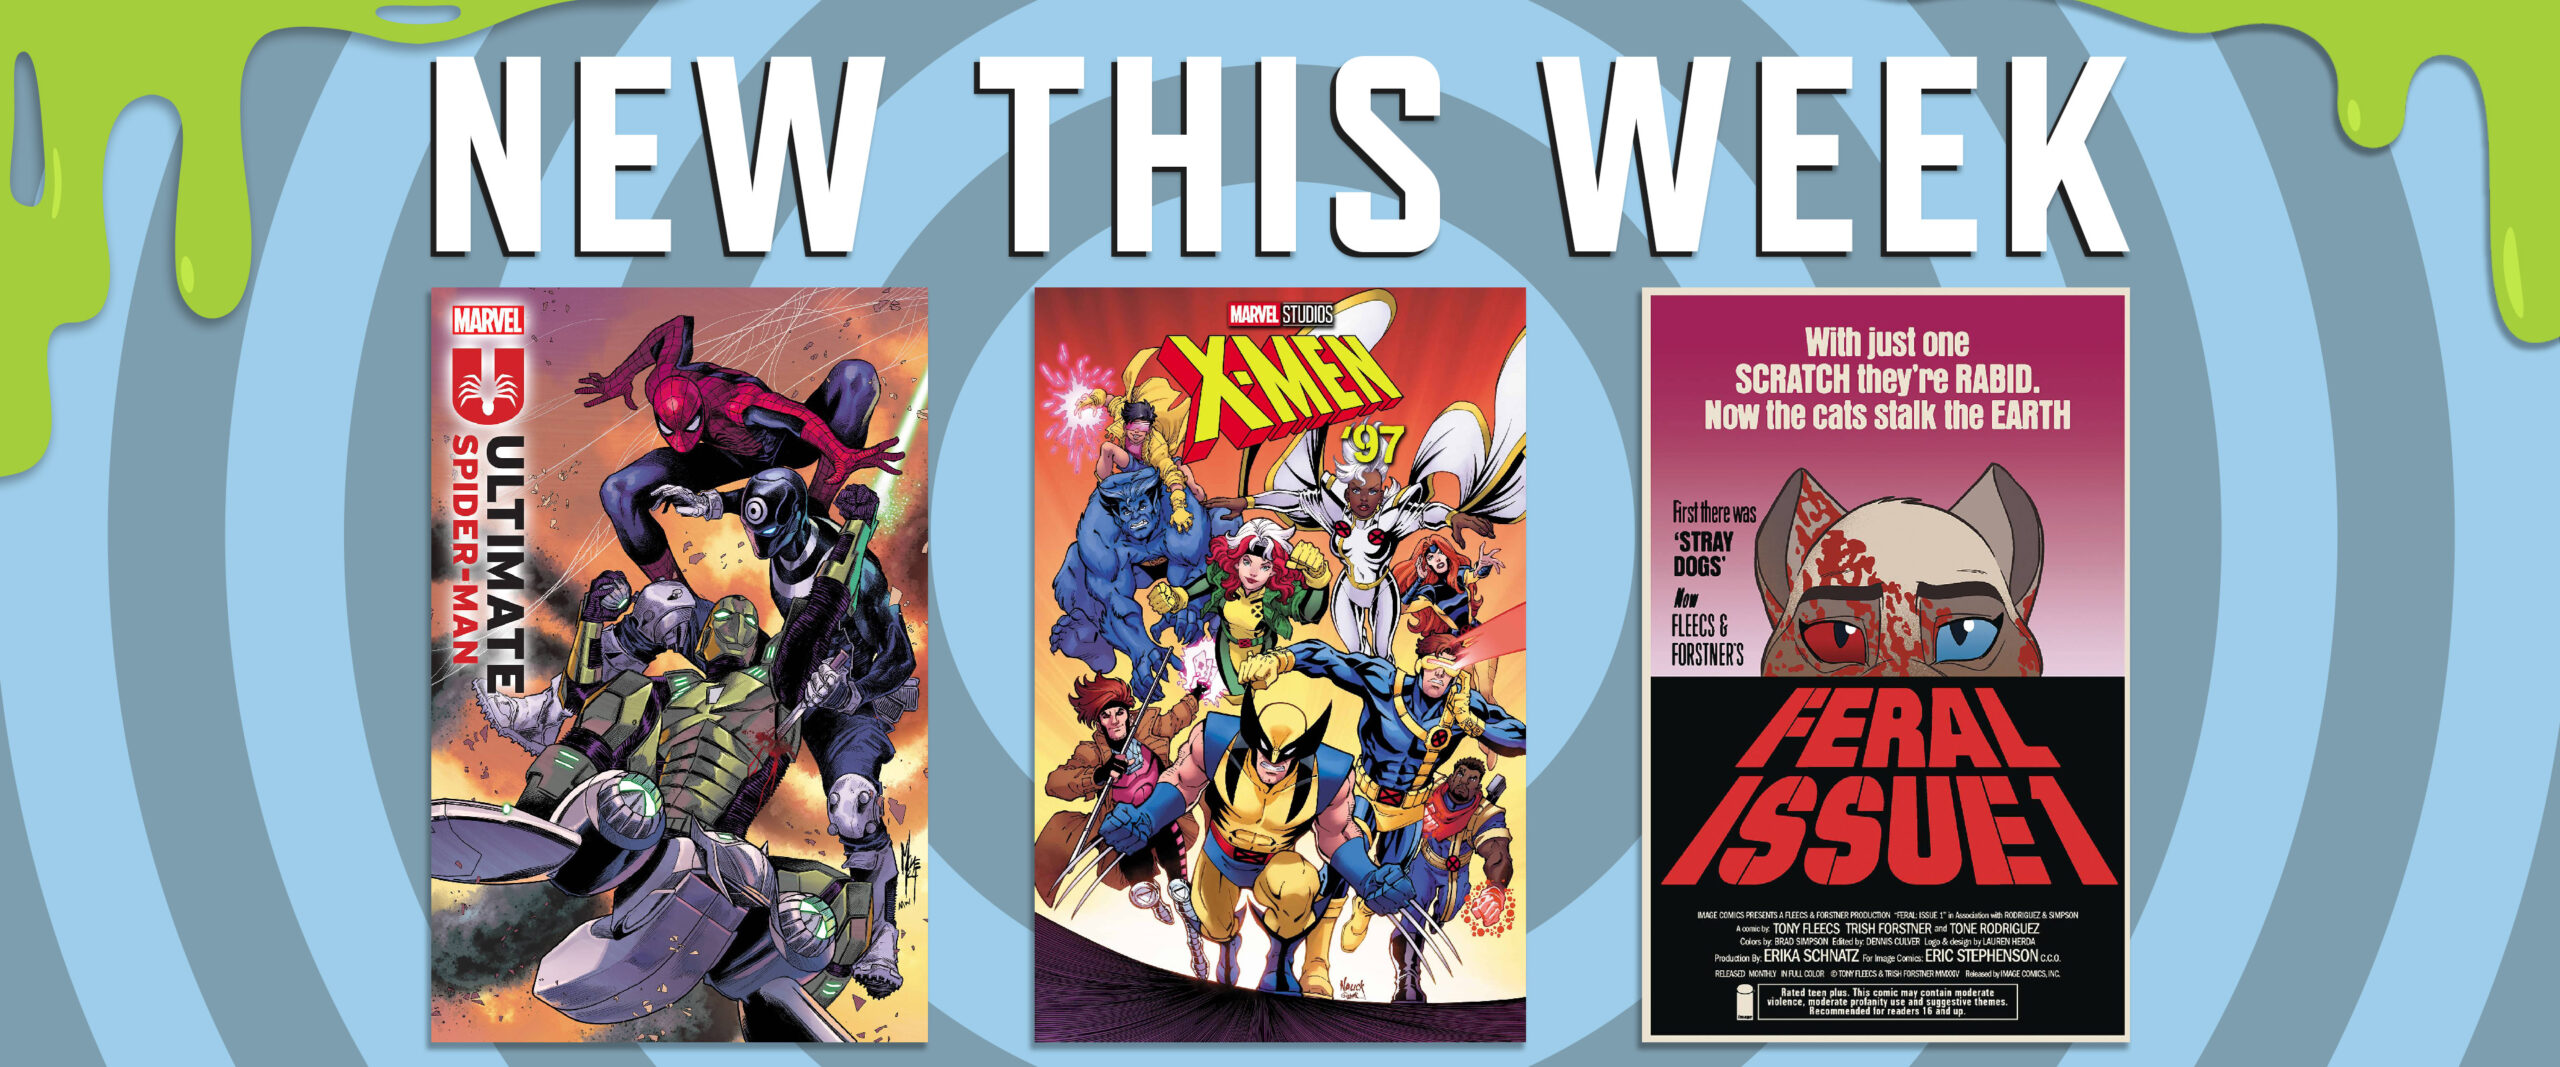 New Comics This Week